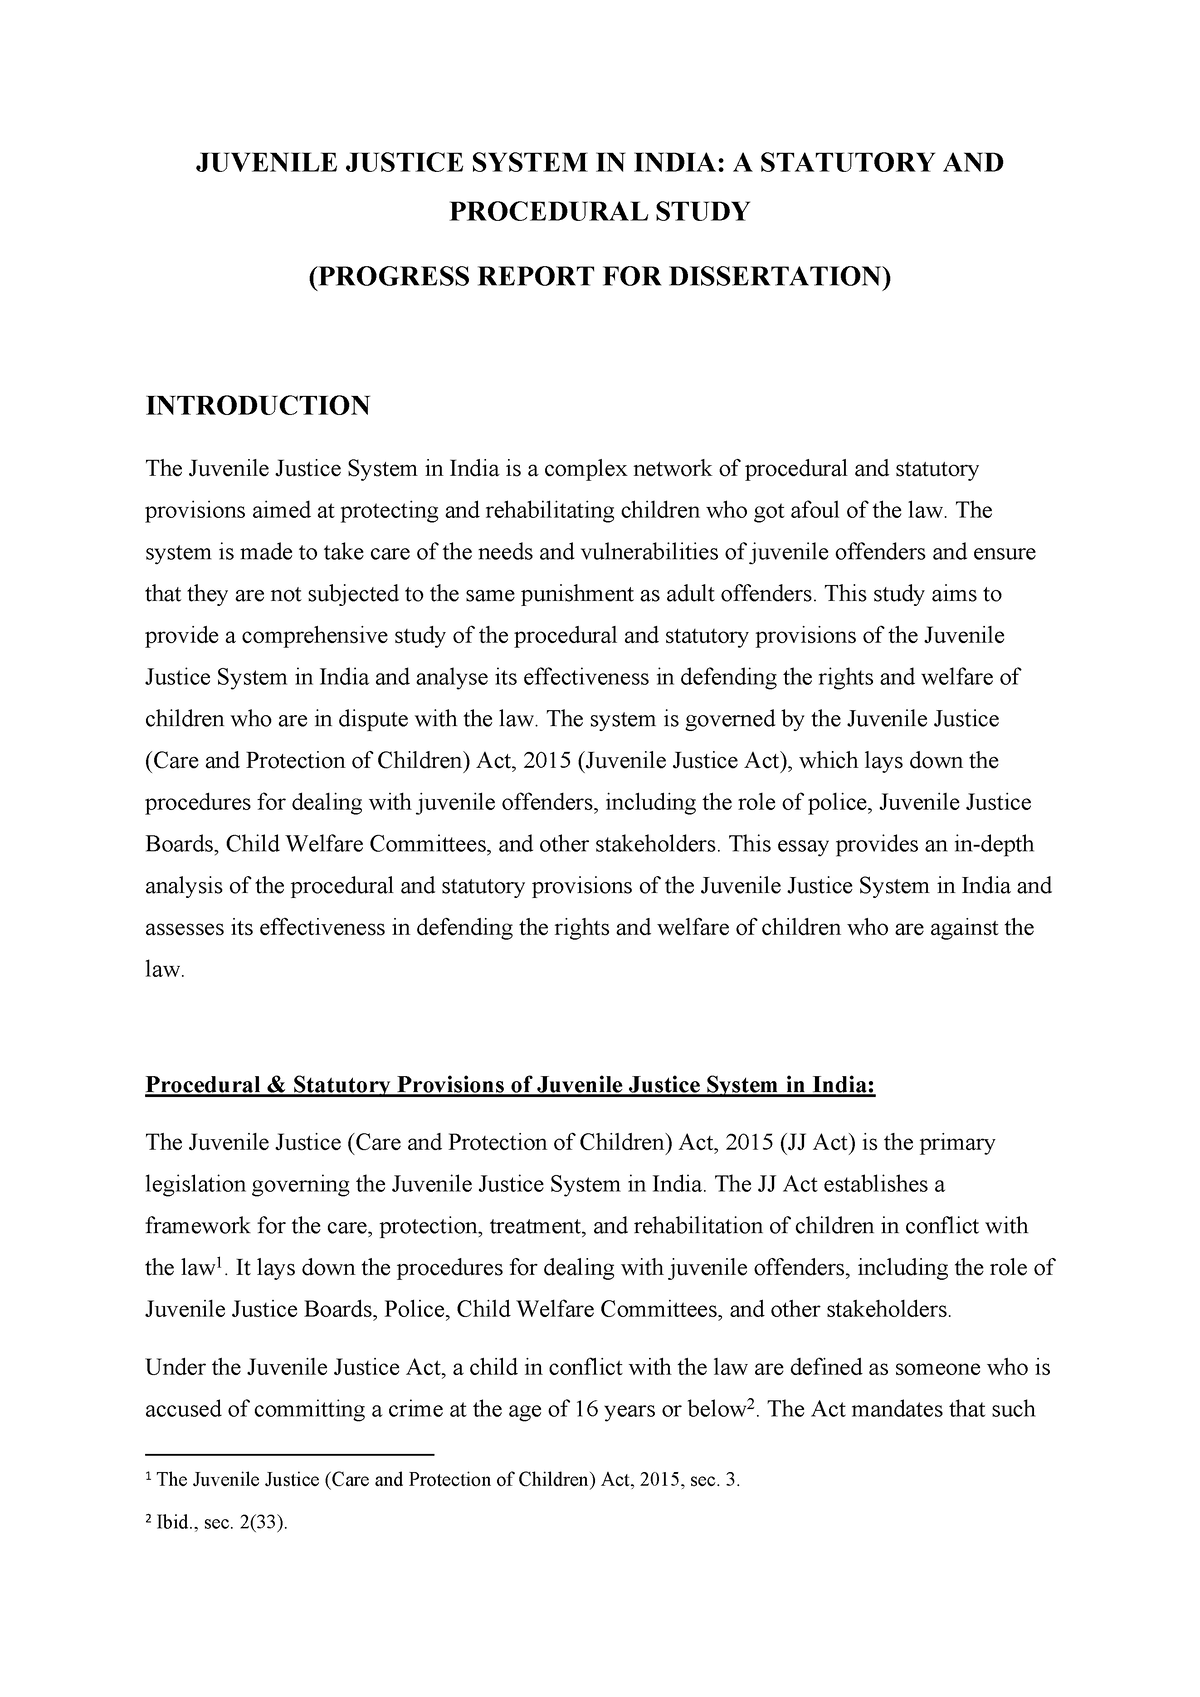 dissertation on juvenile justice